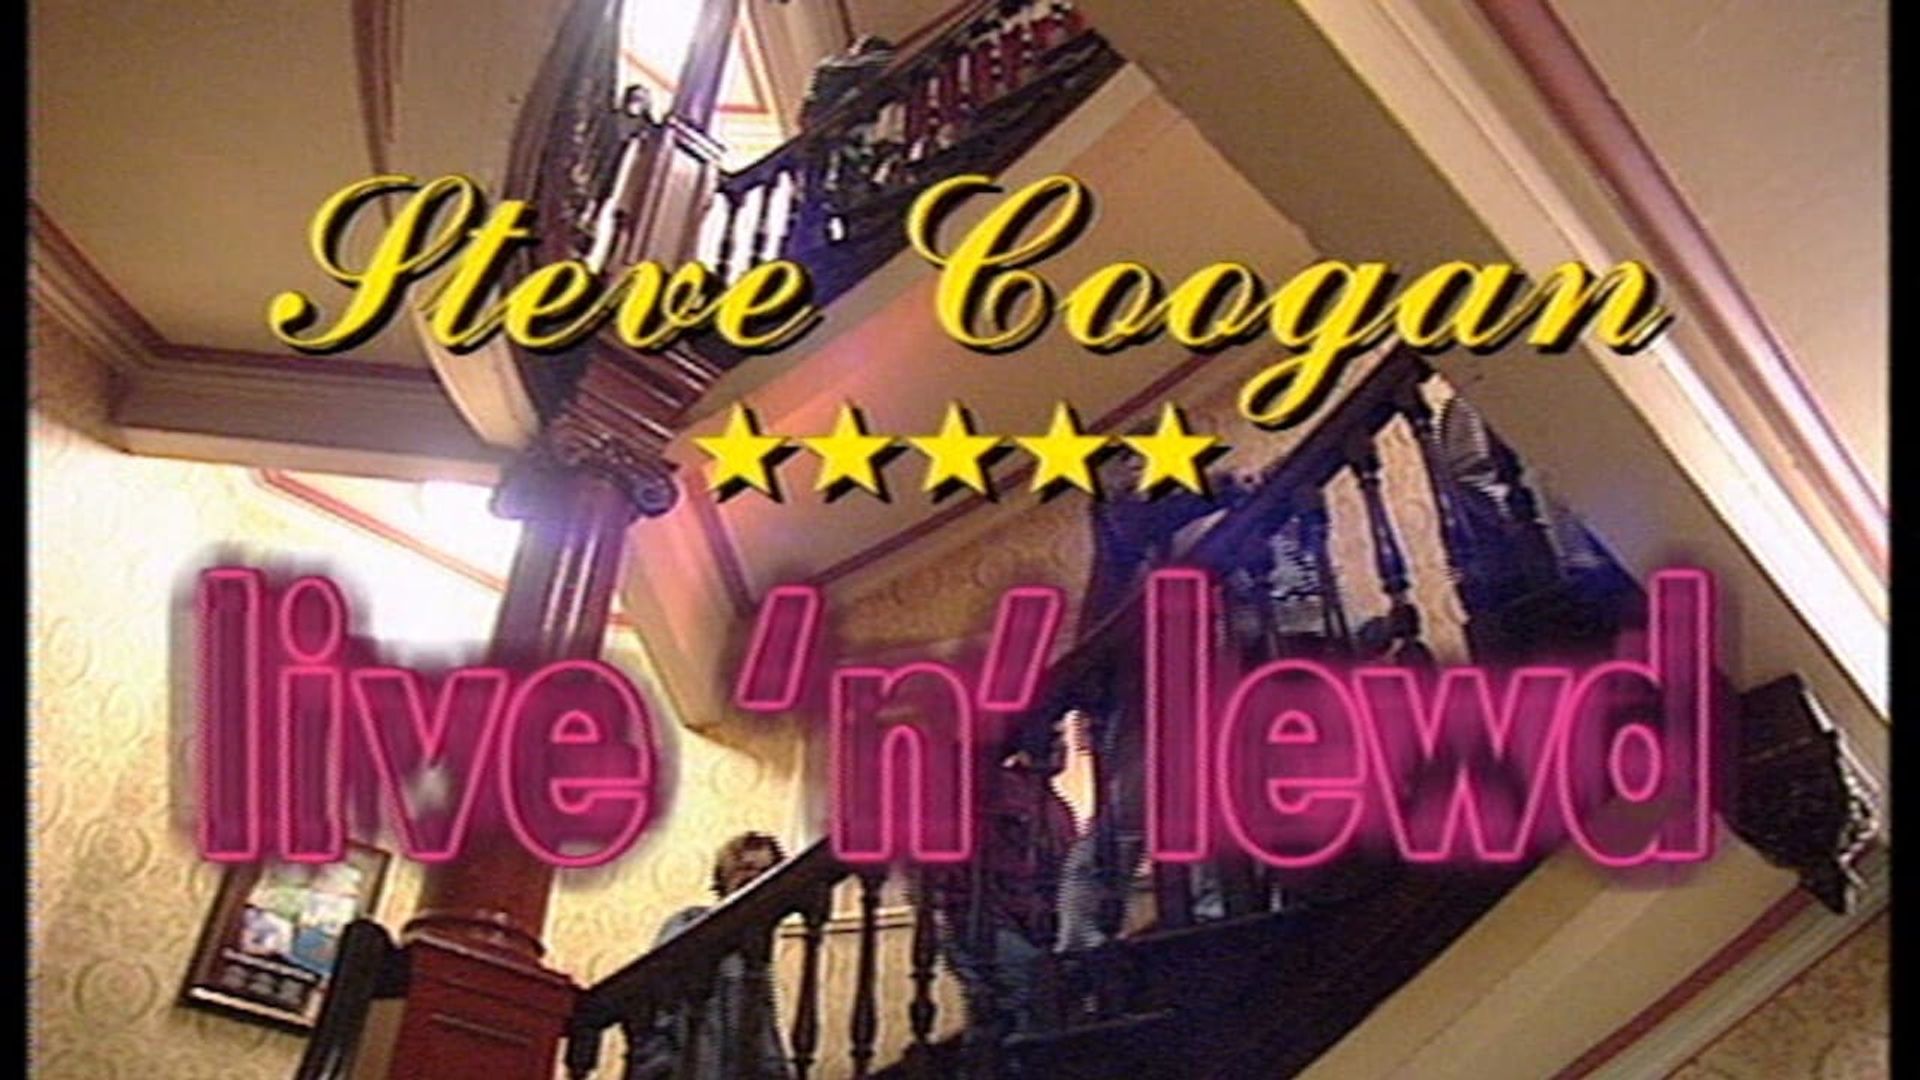 Steve Coogan: Live 'n' Lewd background